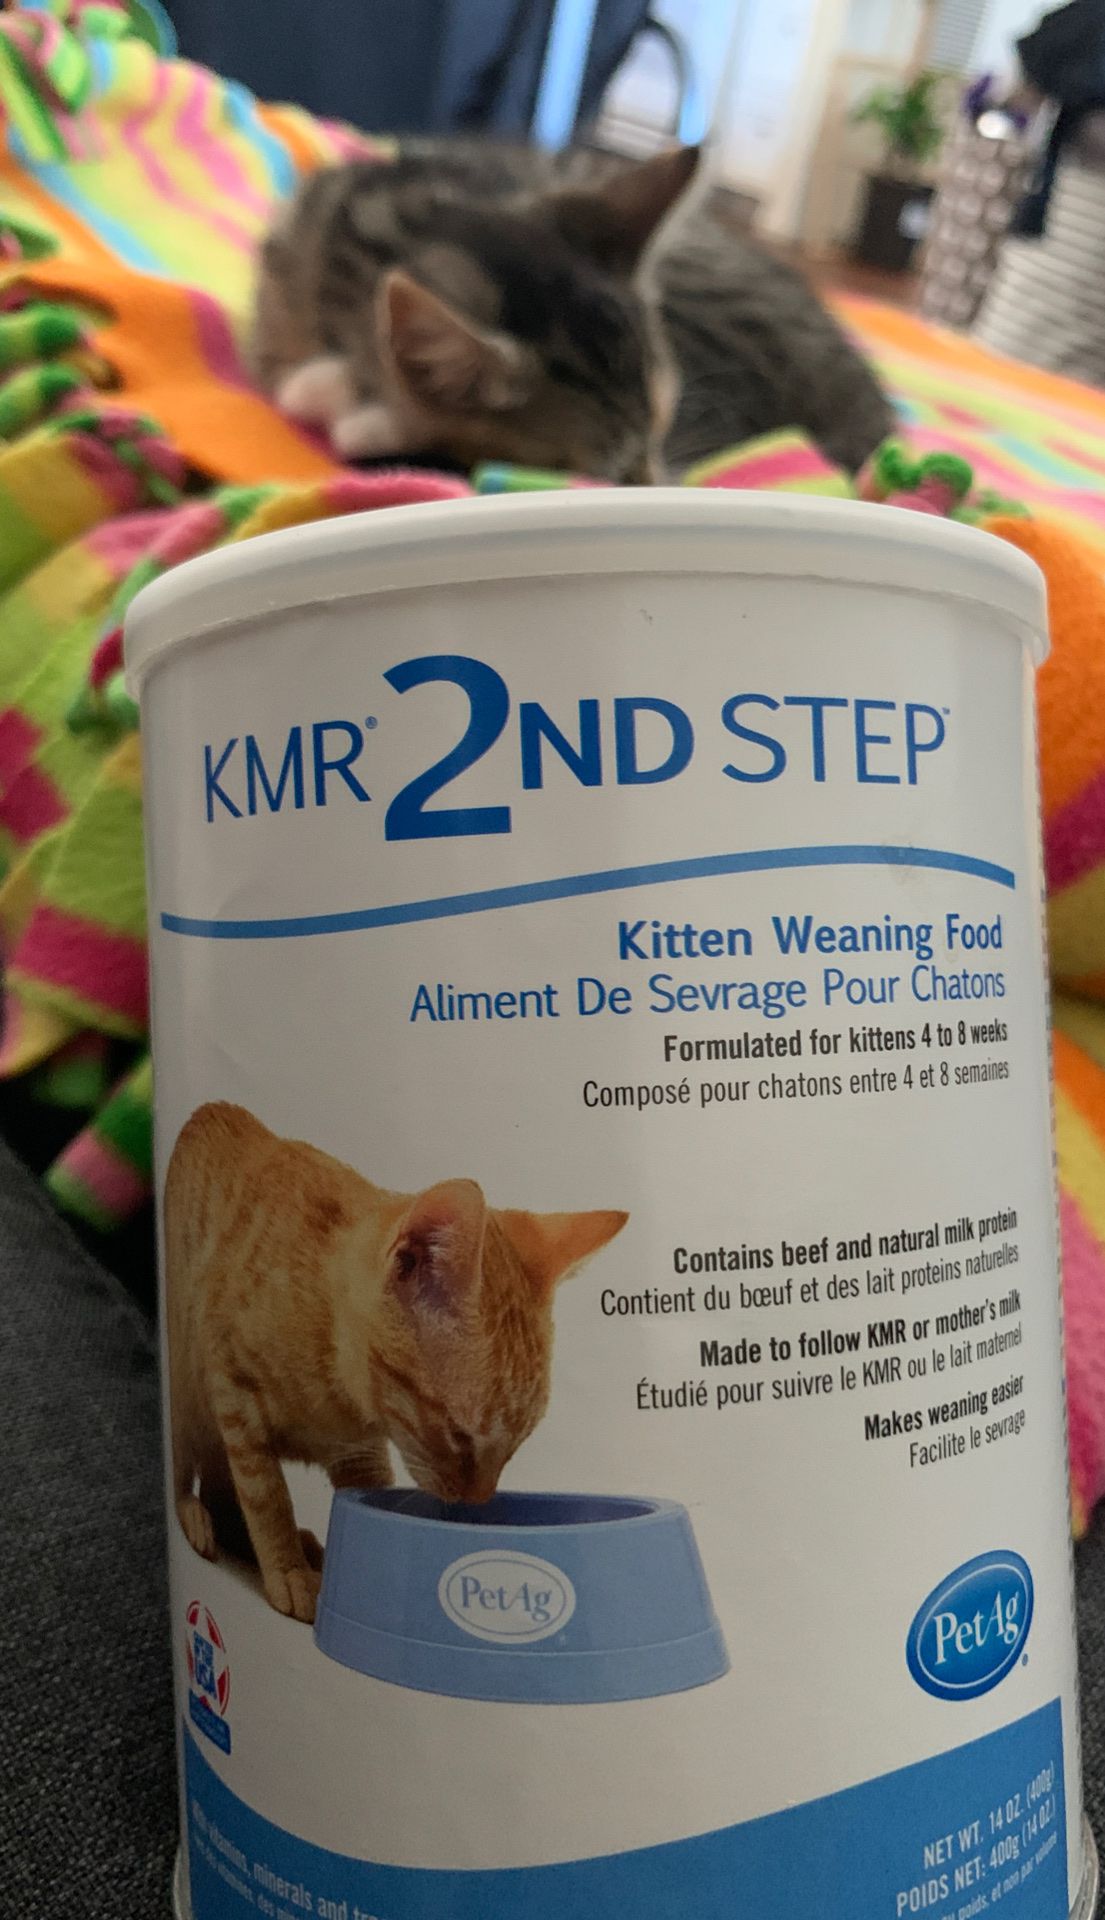 KMR 2nd Step Kitten weaning food.